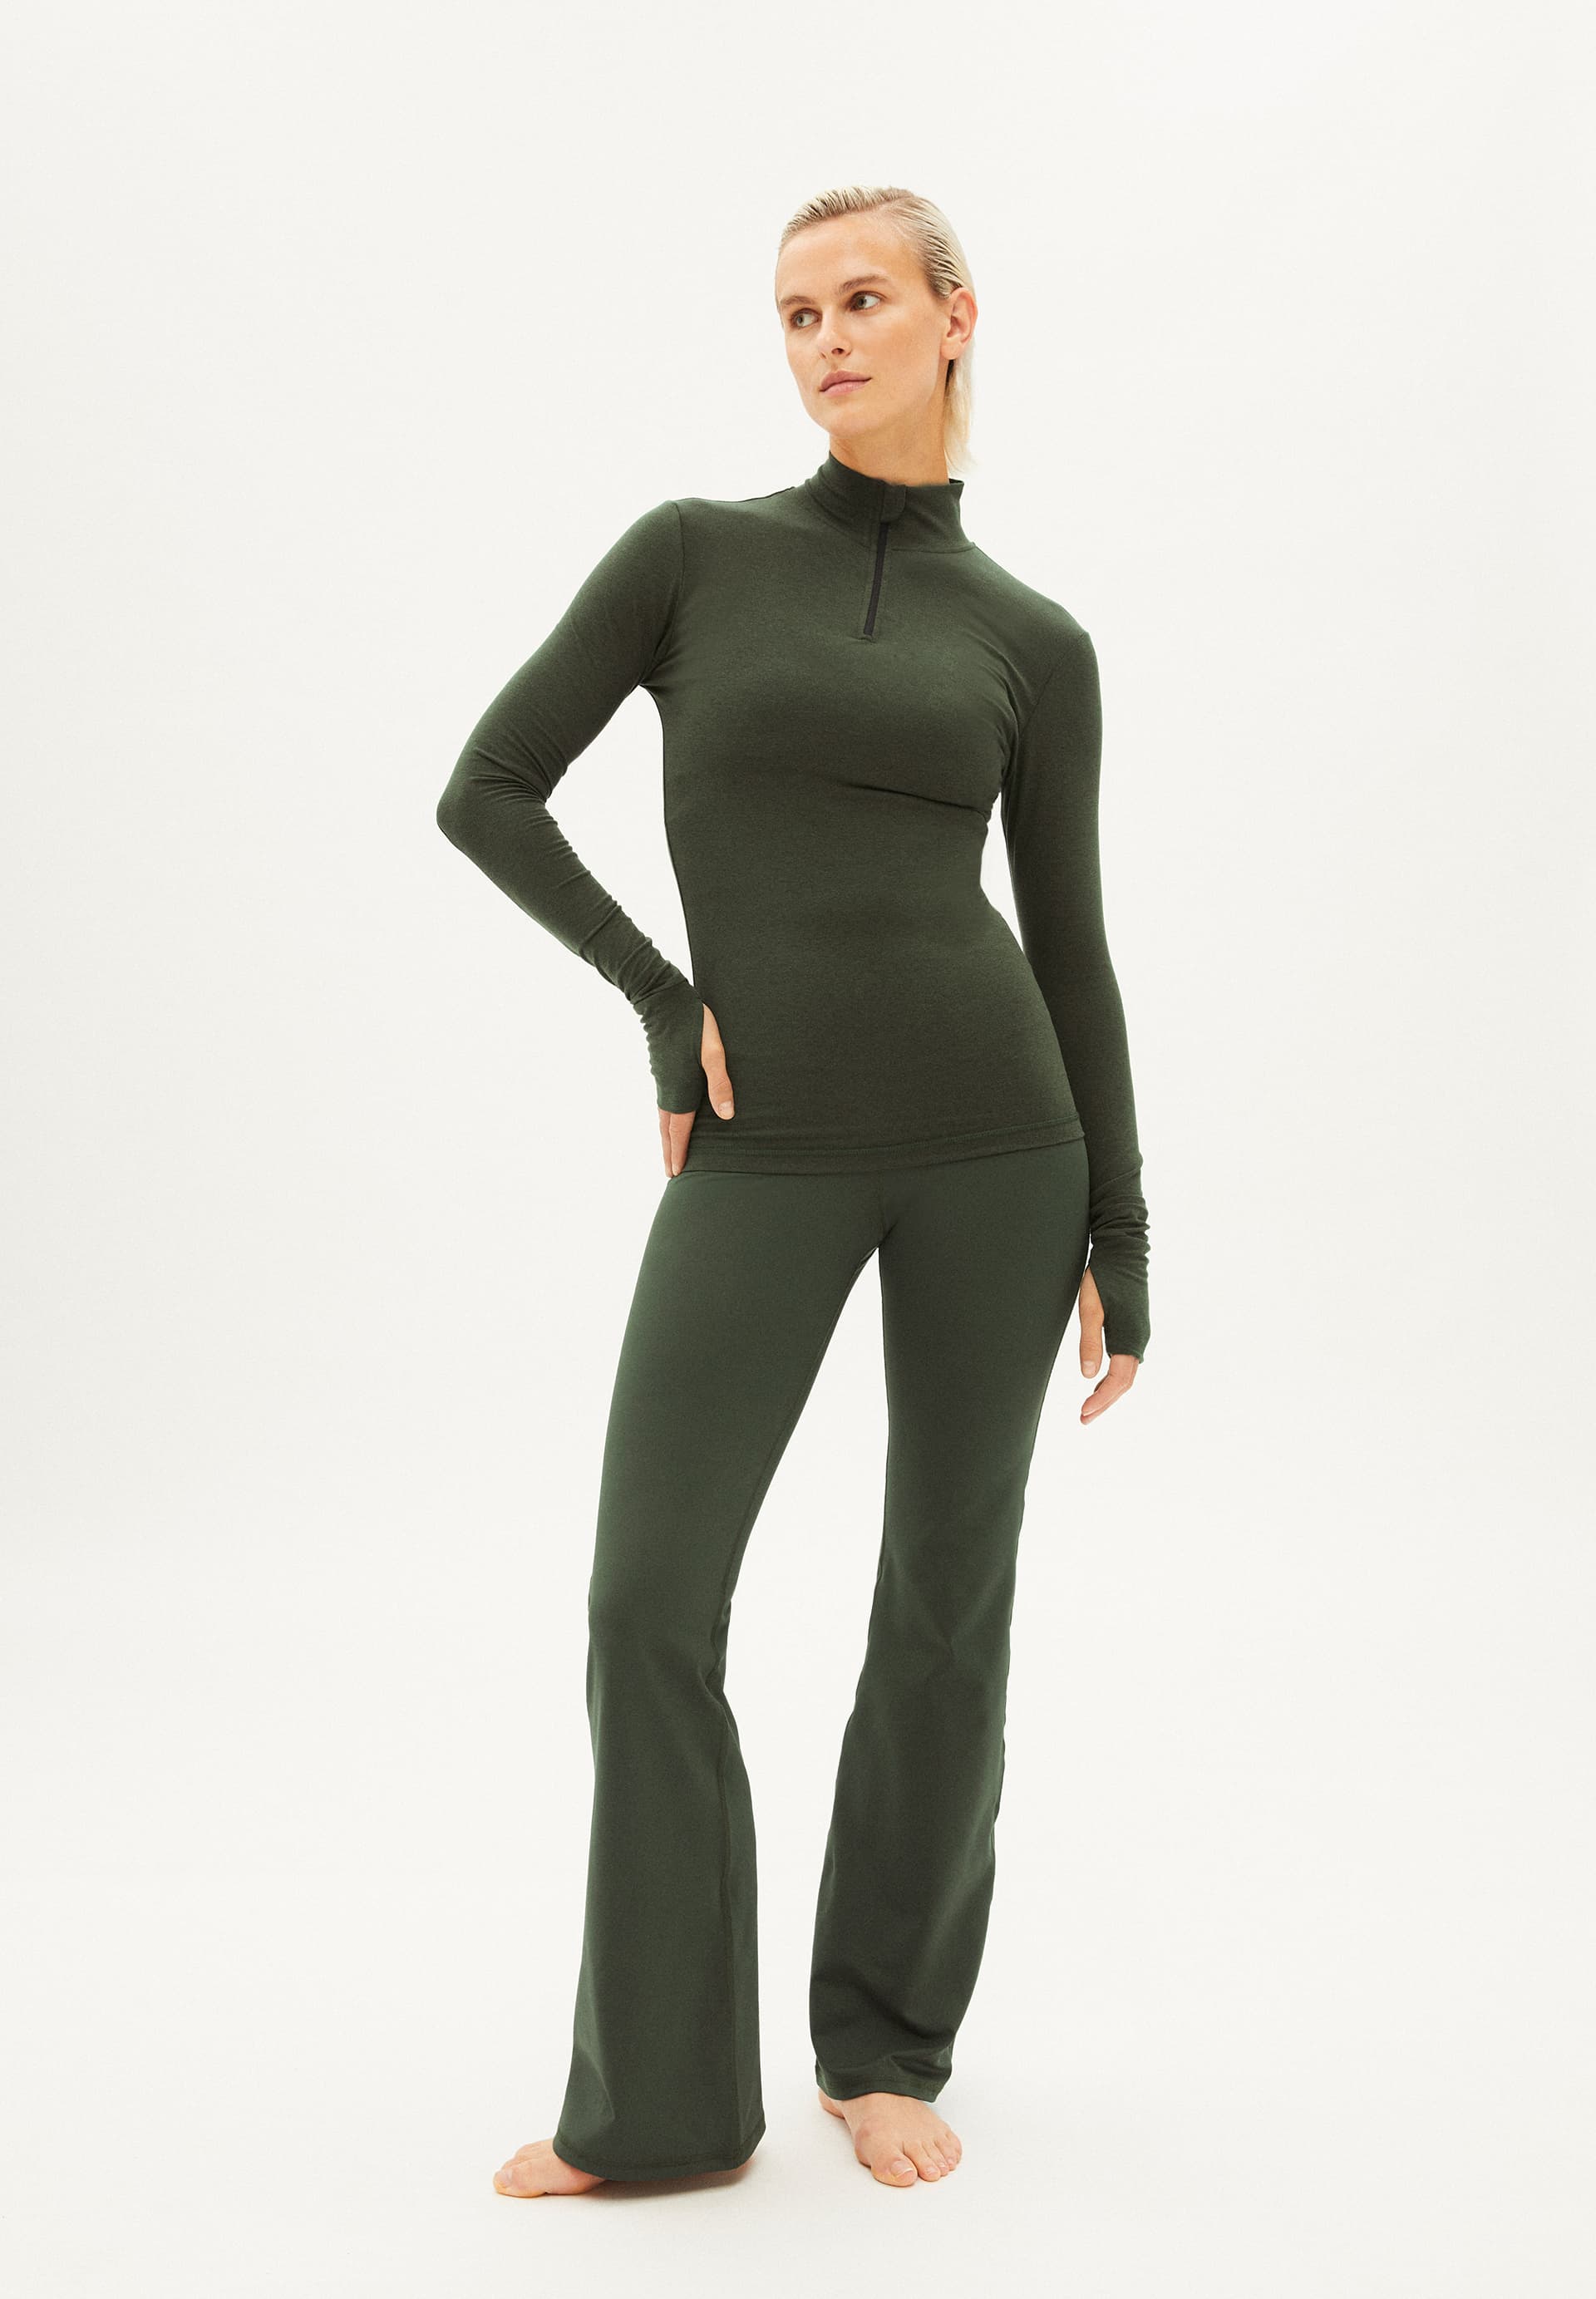 DESNAA Activewear Longsleeve Slim Fit made of TENCEL™ Lyocell Mix